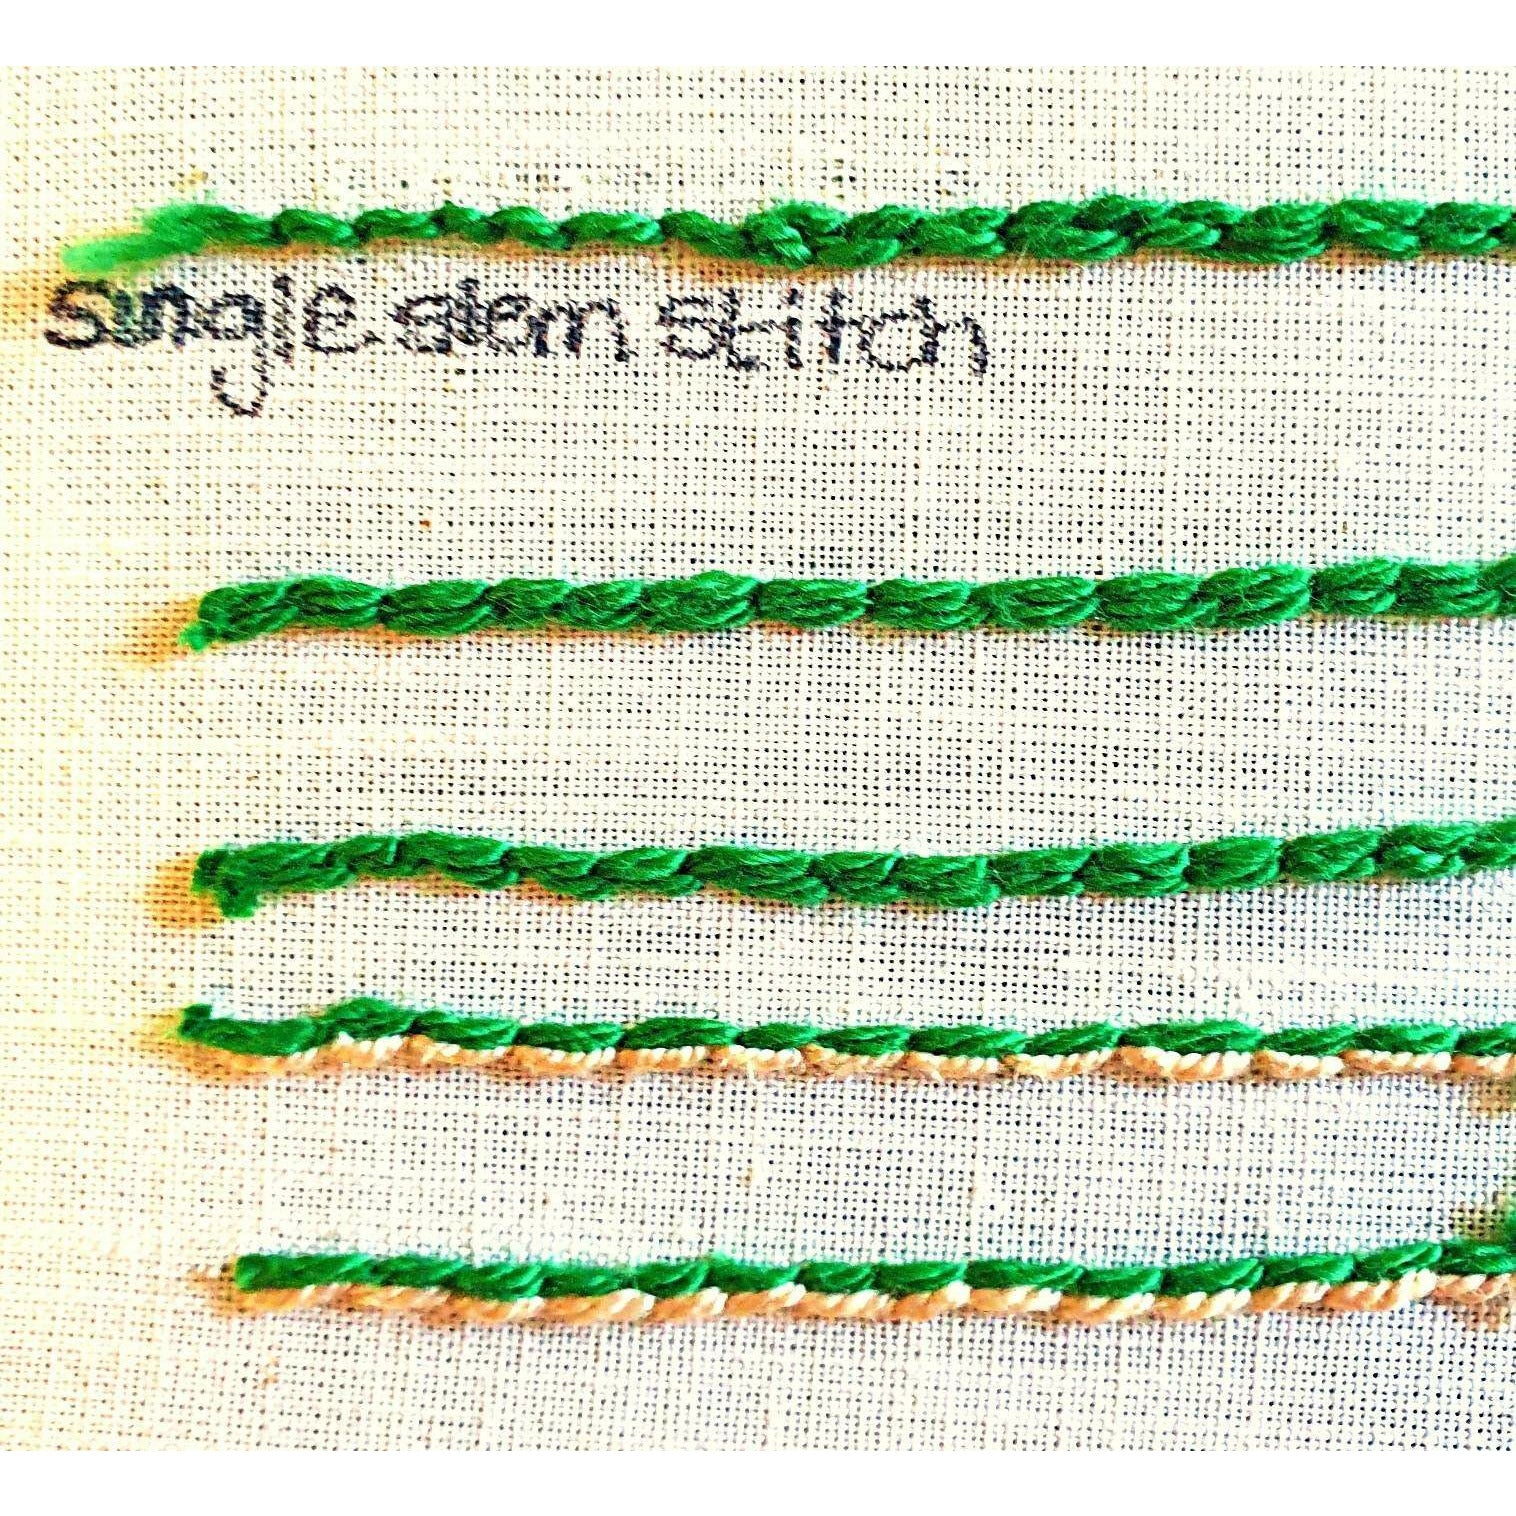 Ultra Punch Needle Embroidery 3-Needle Set - 034722927260